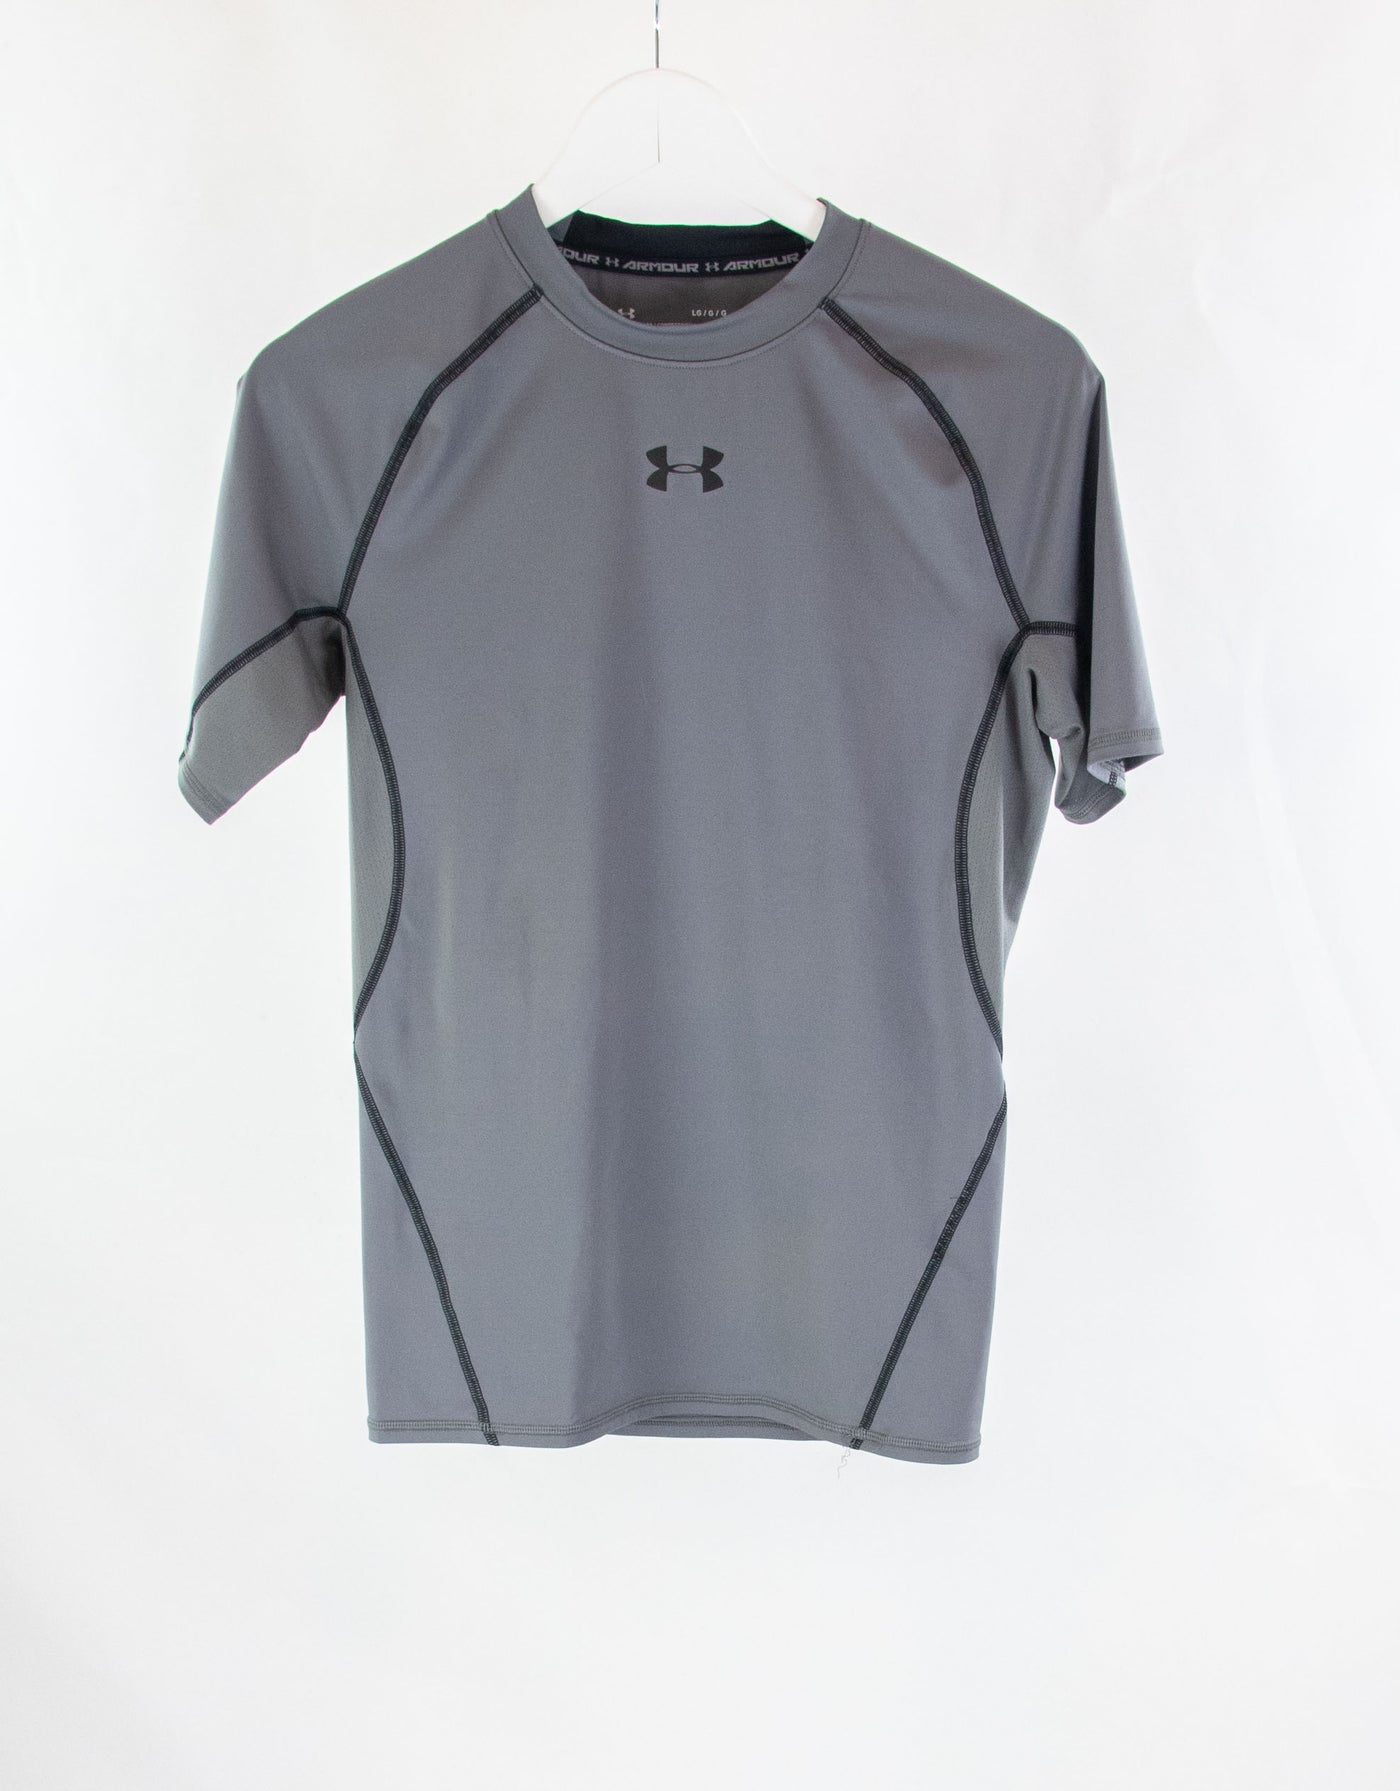 Camiseta gris deportiva ARMOUR